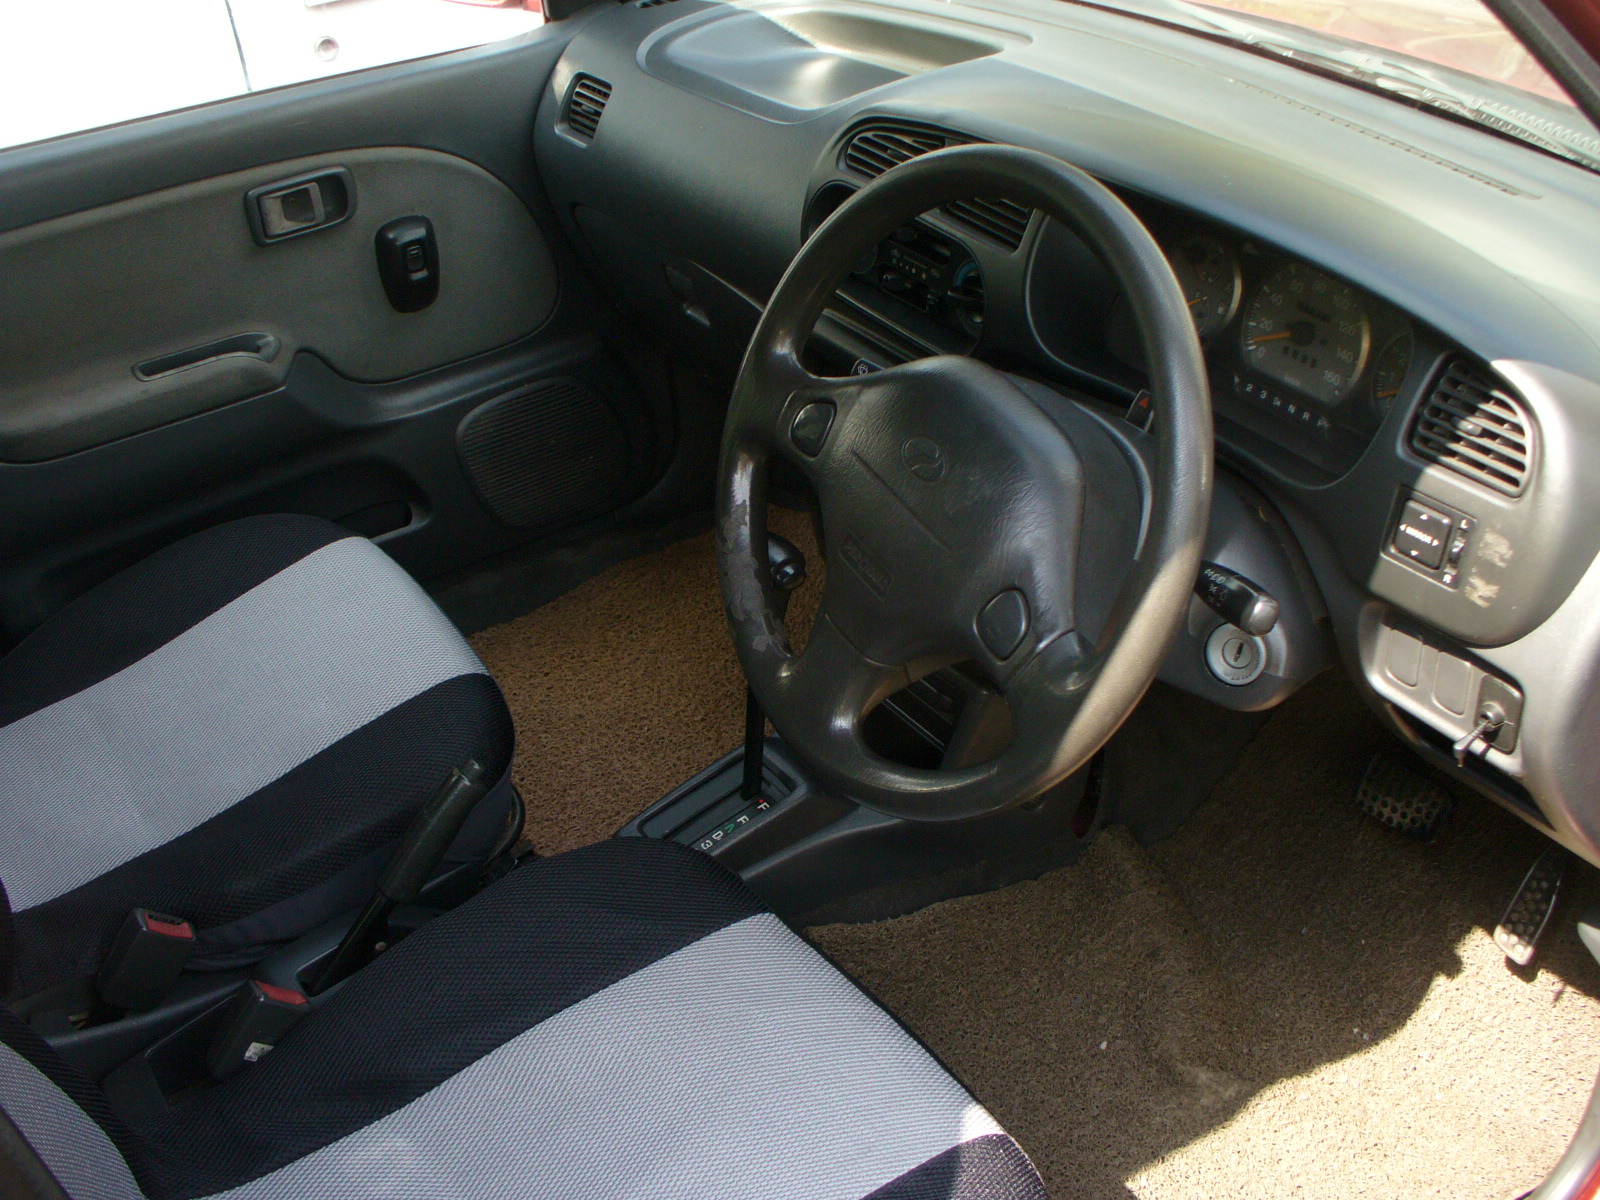 Stream Used Car: Perodua Kelisa 1.0 Auto 2001 WJP